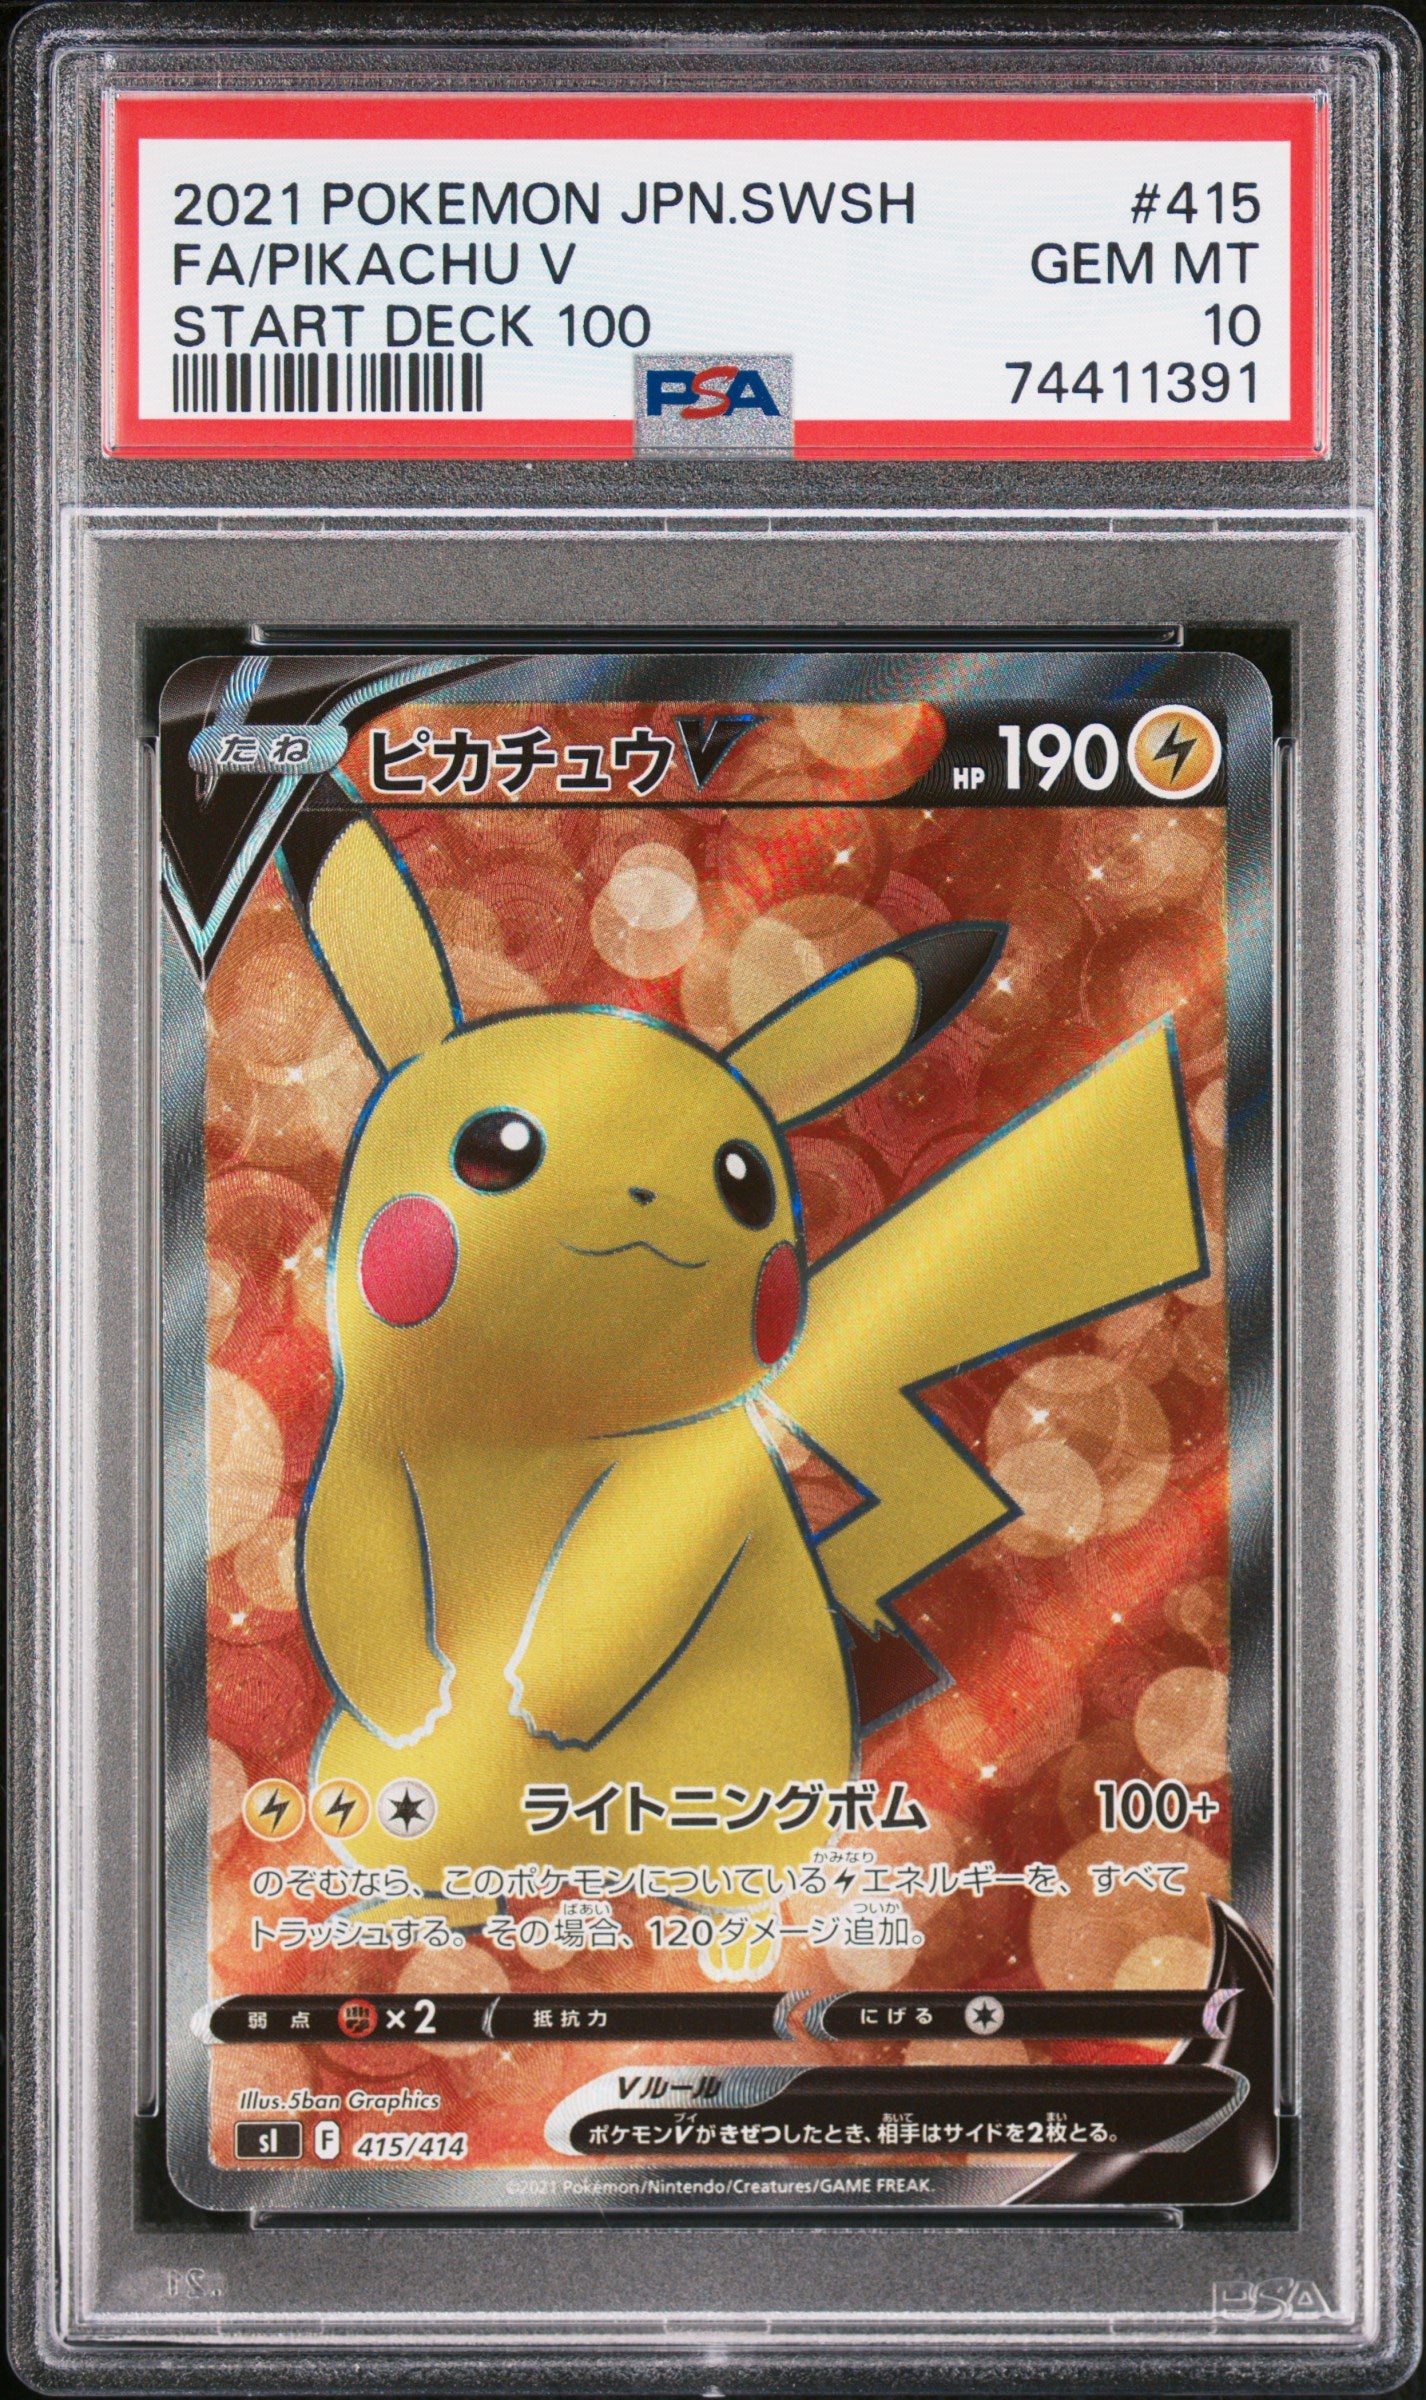 PSA 10 - Pikachu V 415/414 sl Start Deck 100 - Pokemon – JustEncased